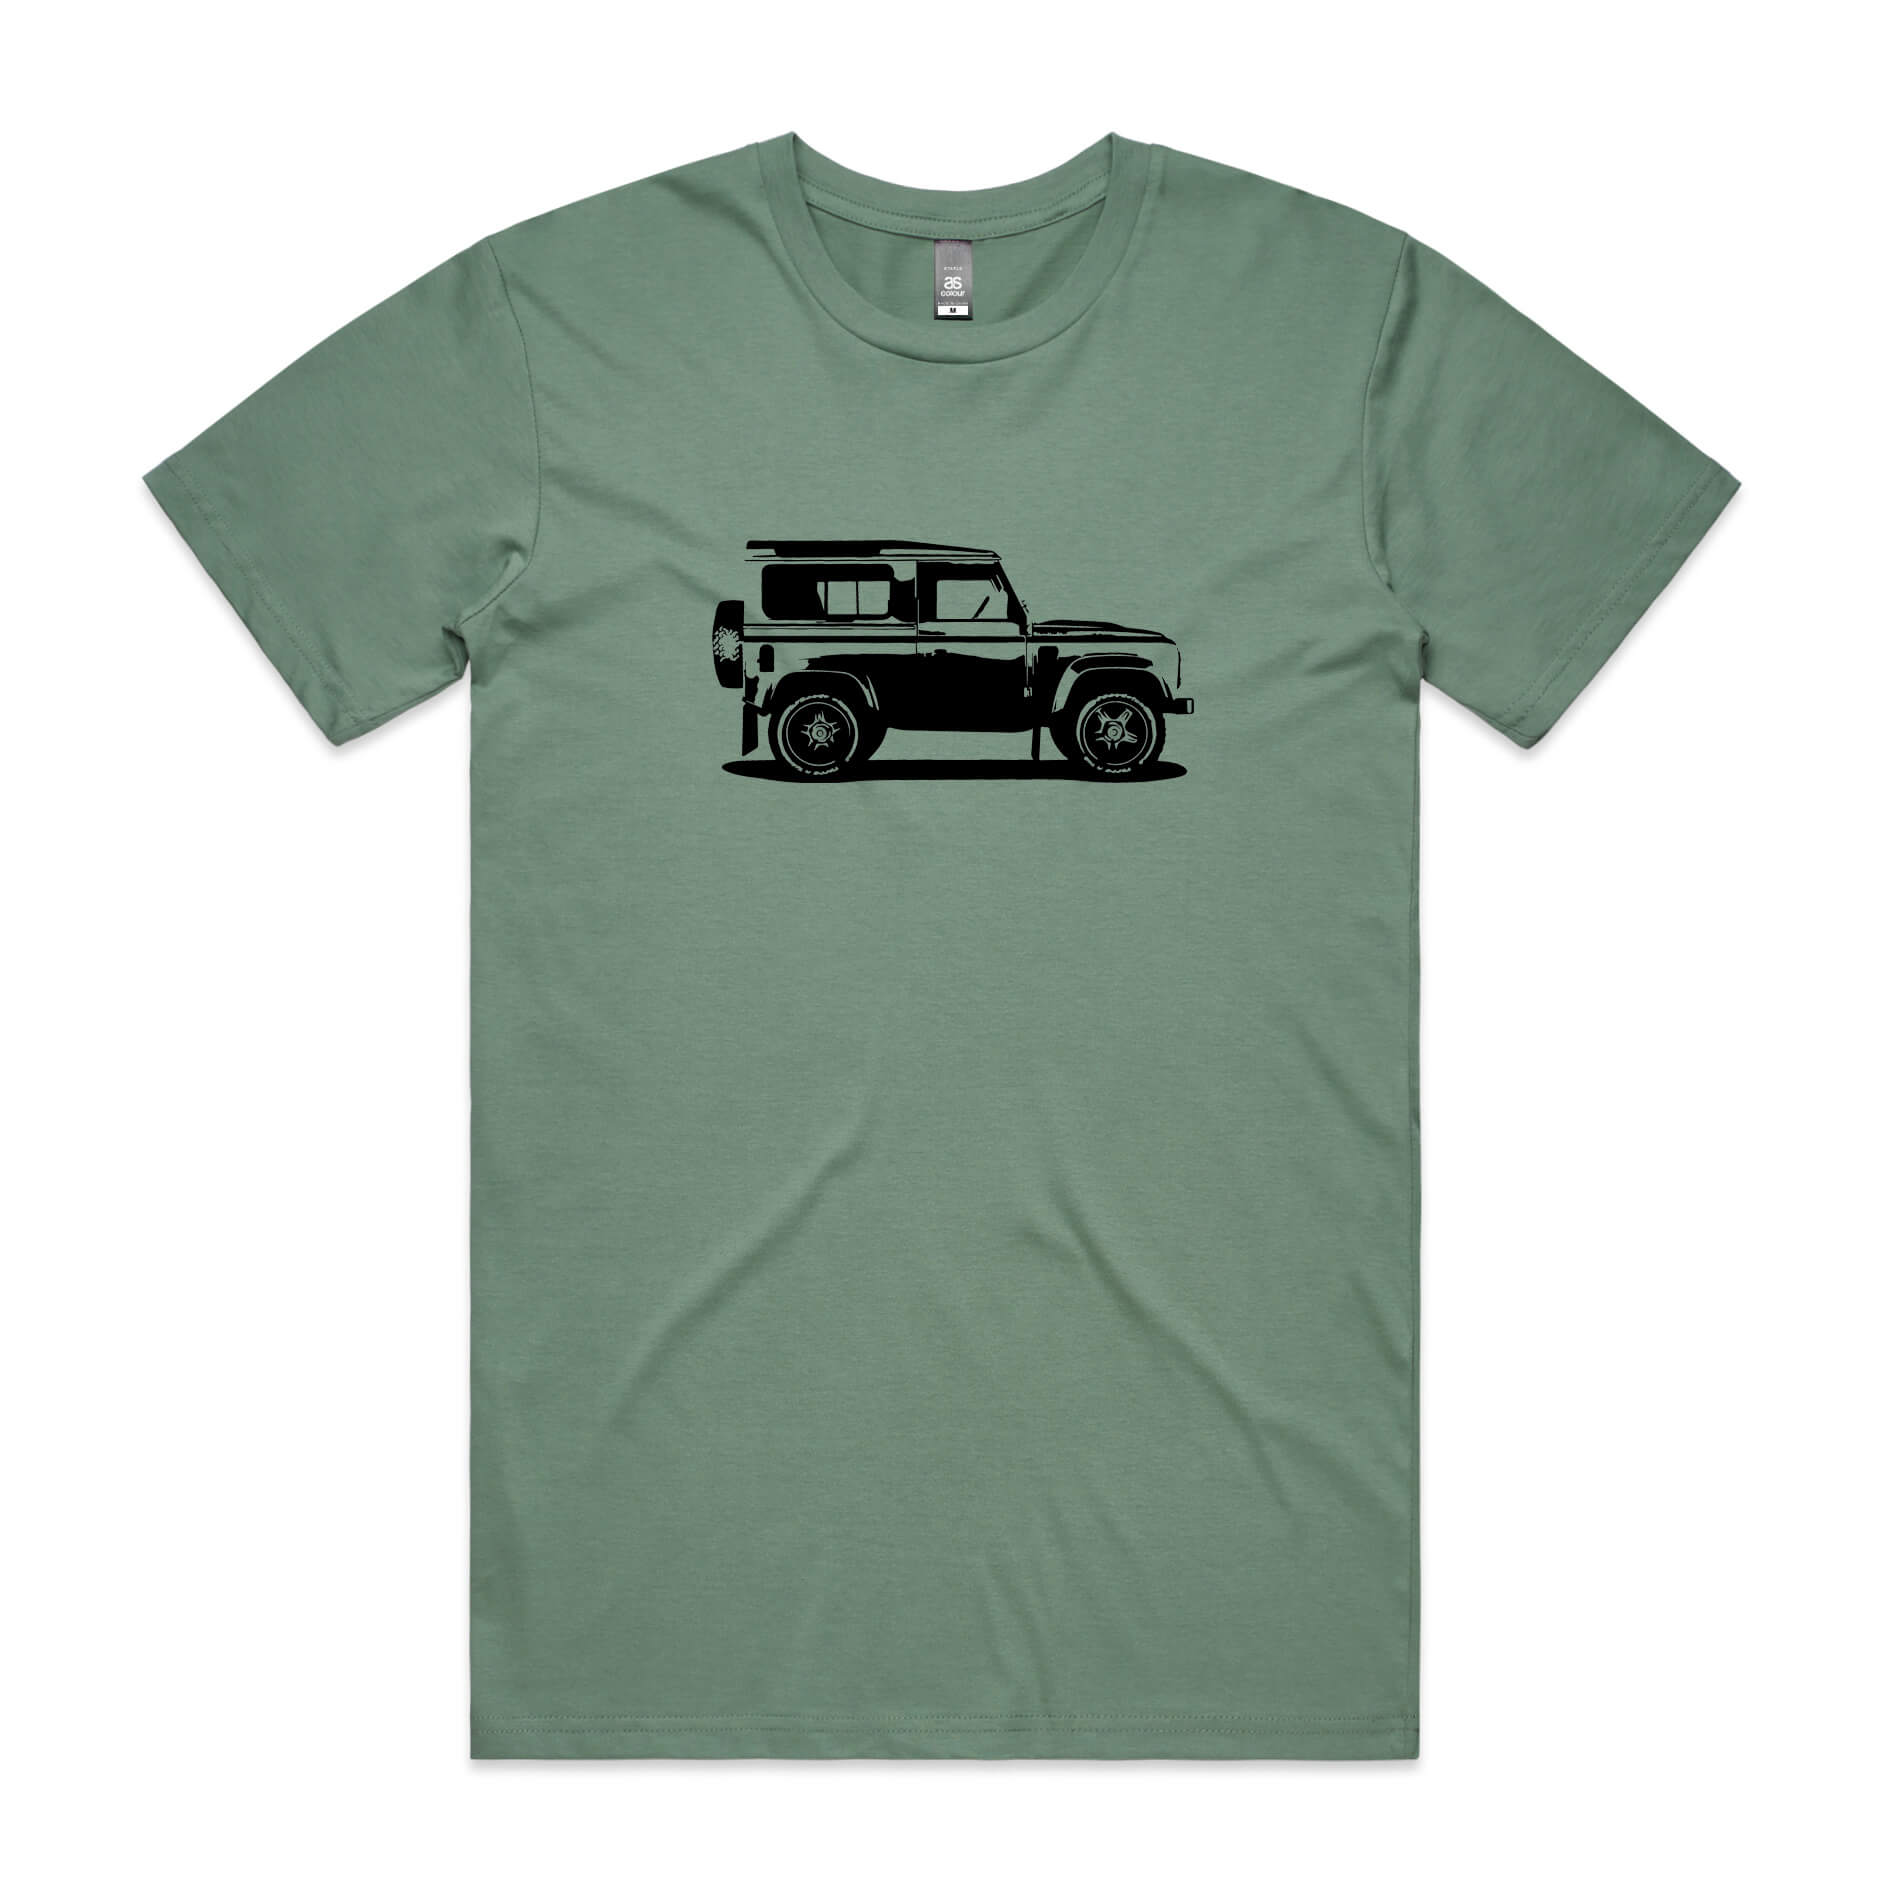 Land Rover Defender t-shirt in sage green